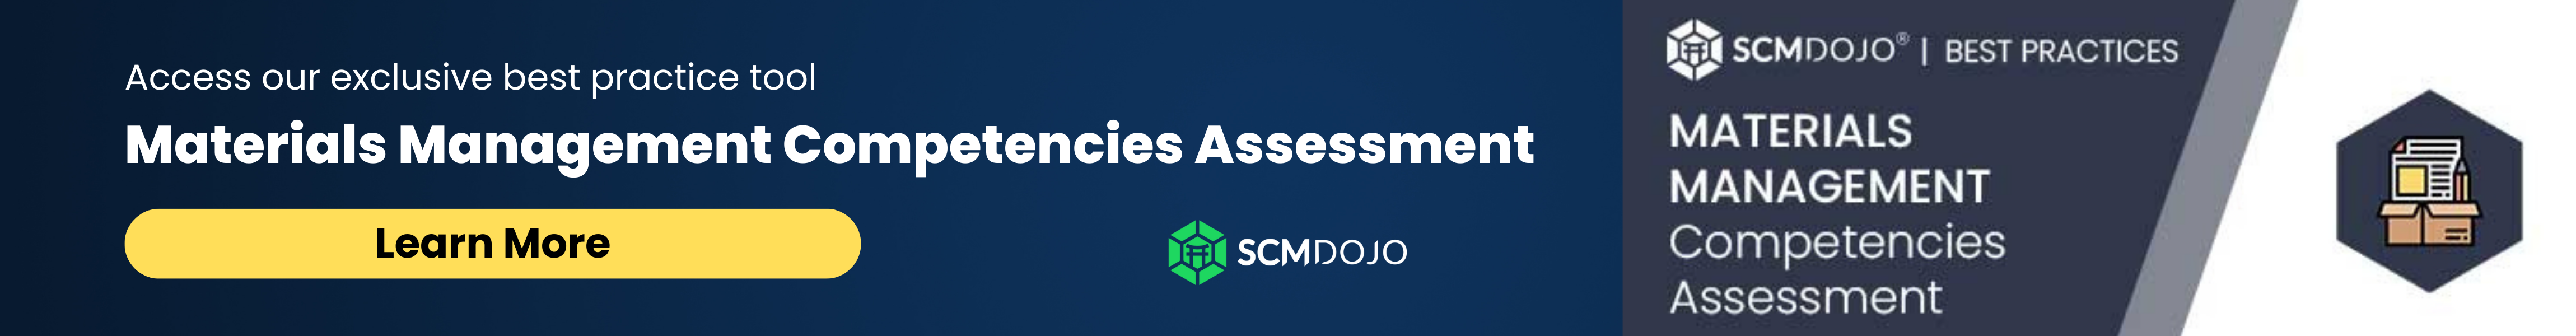 Materials Management Competencies Assessment